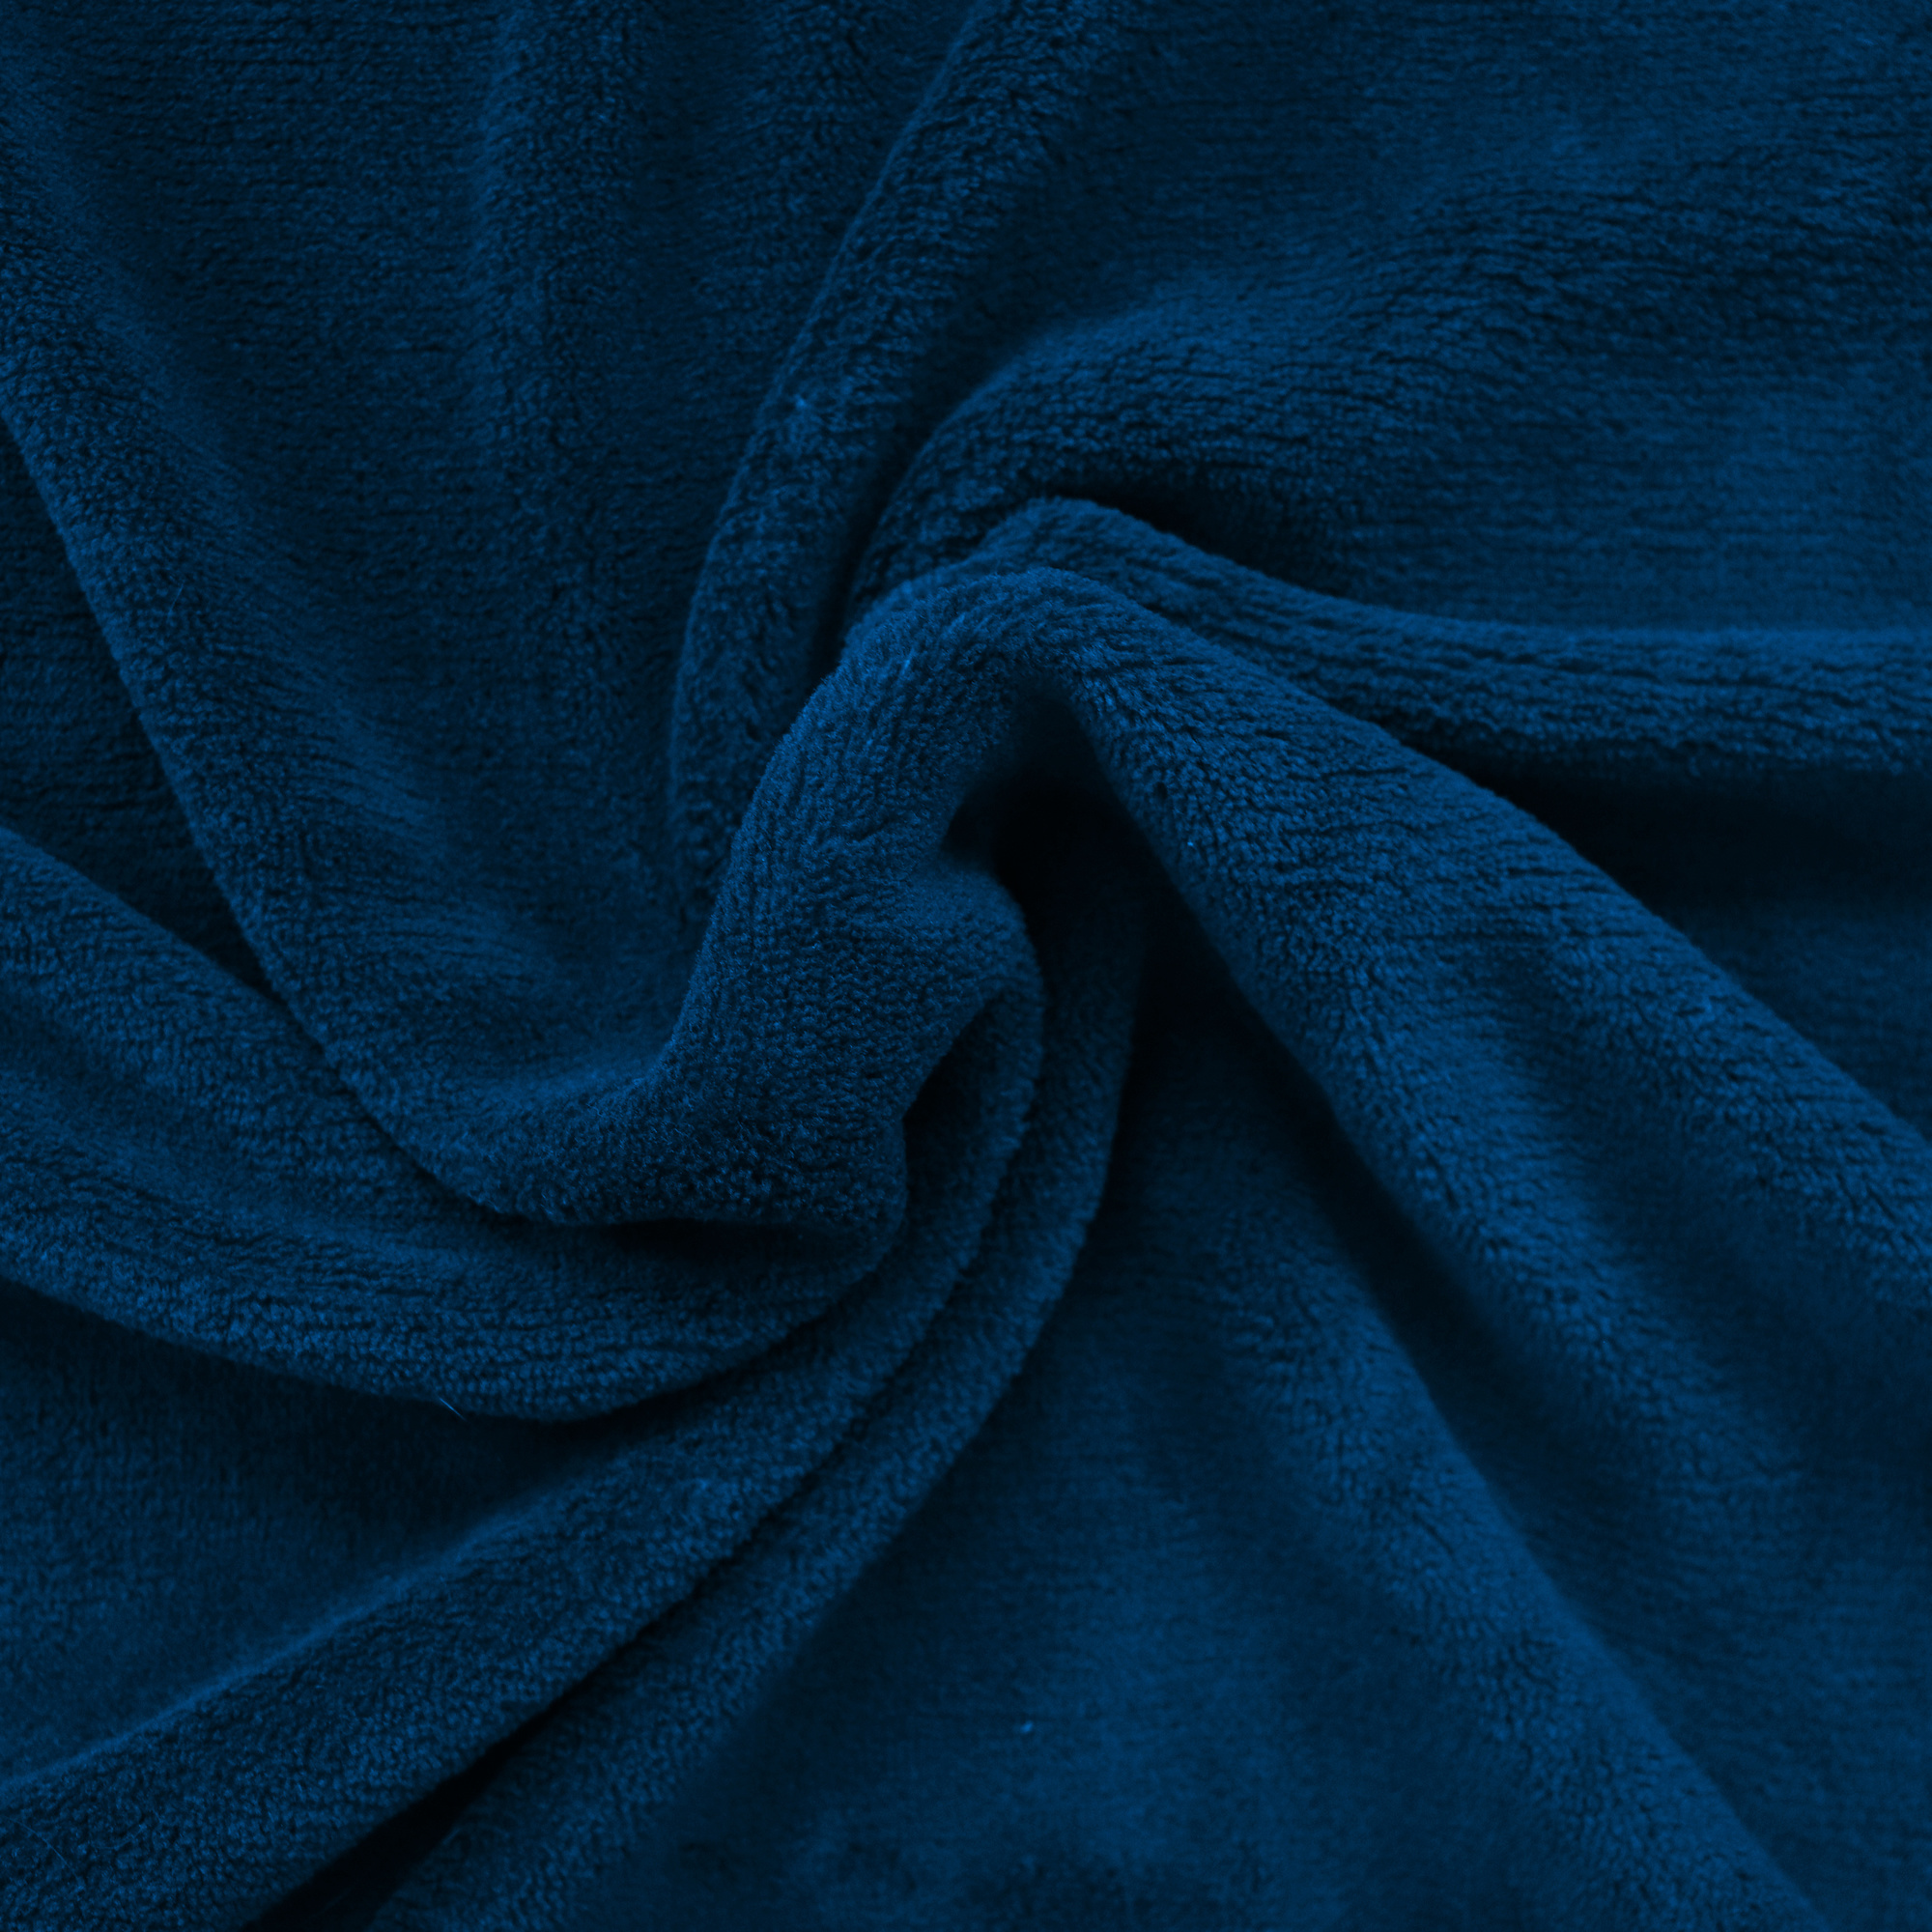 Paris Saint Germain Fleece Blanket, Premium - 125 x 150 cm - Polyester